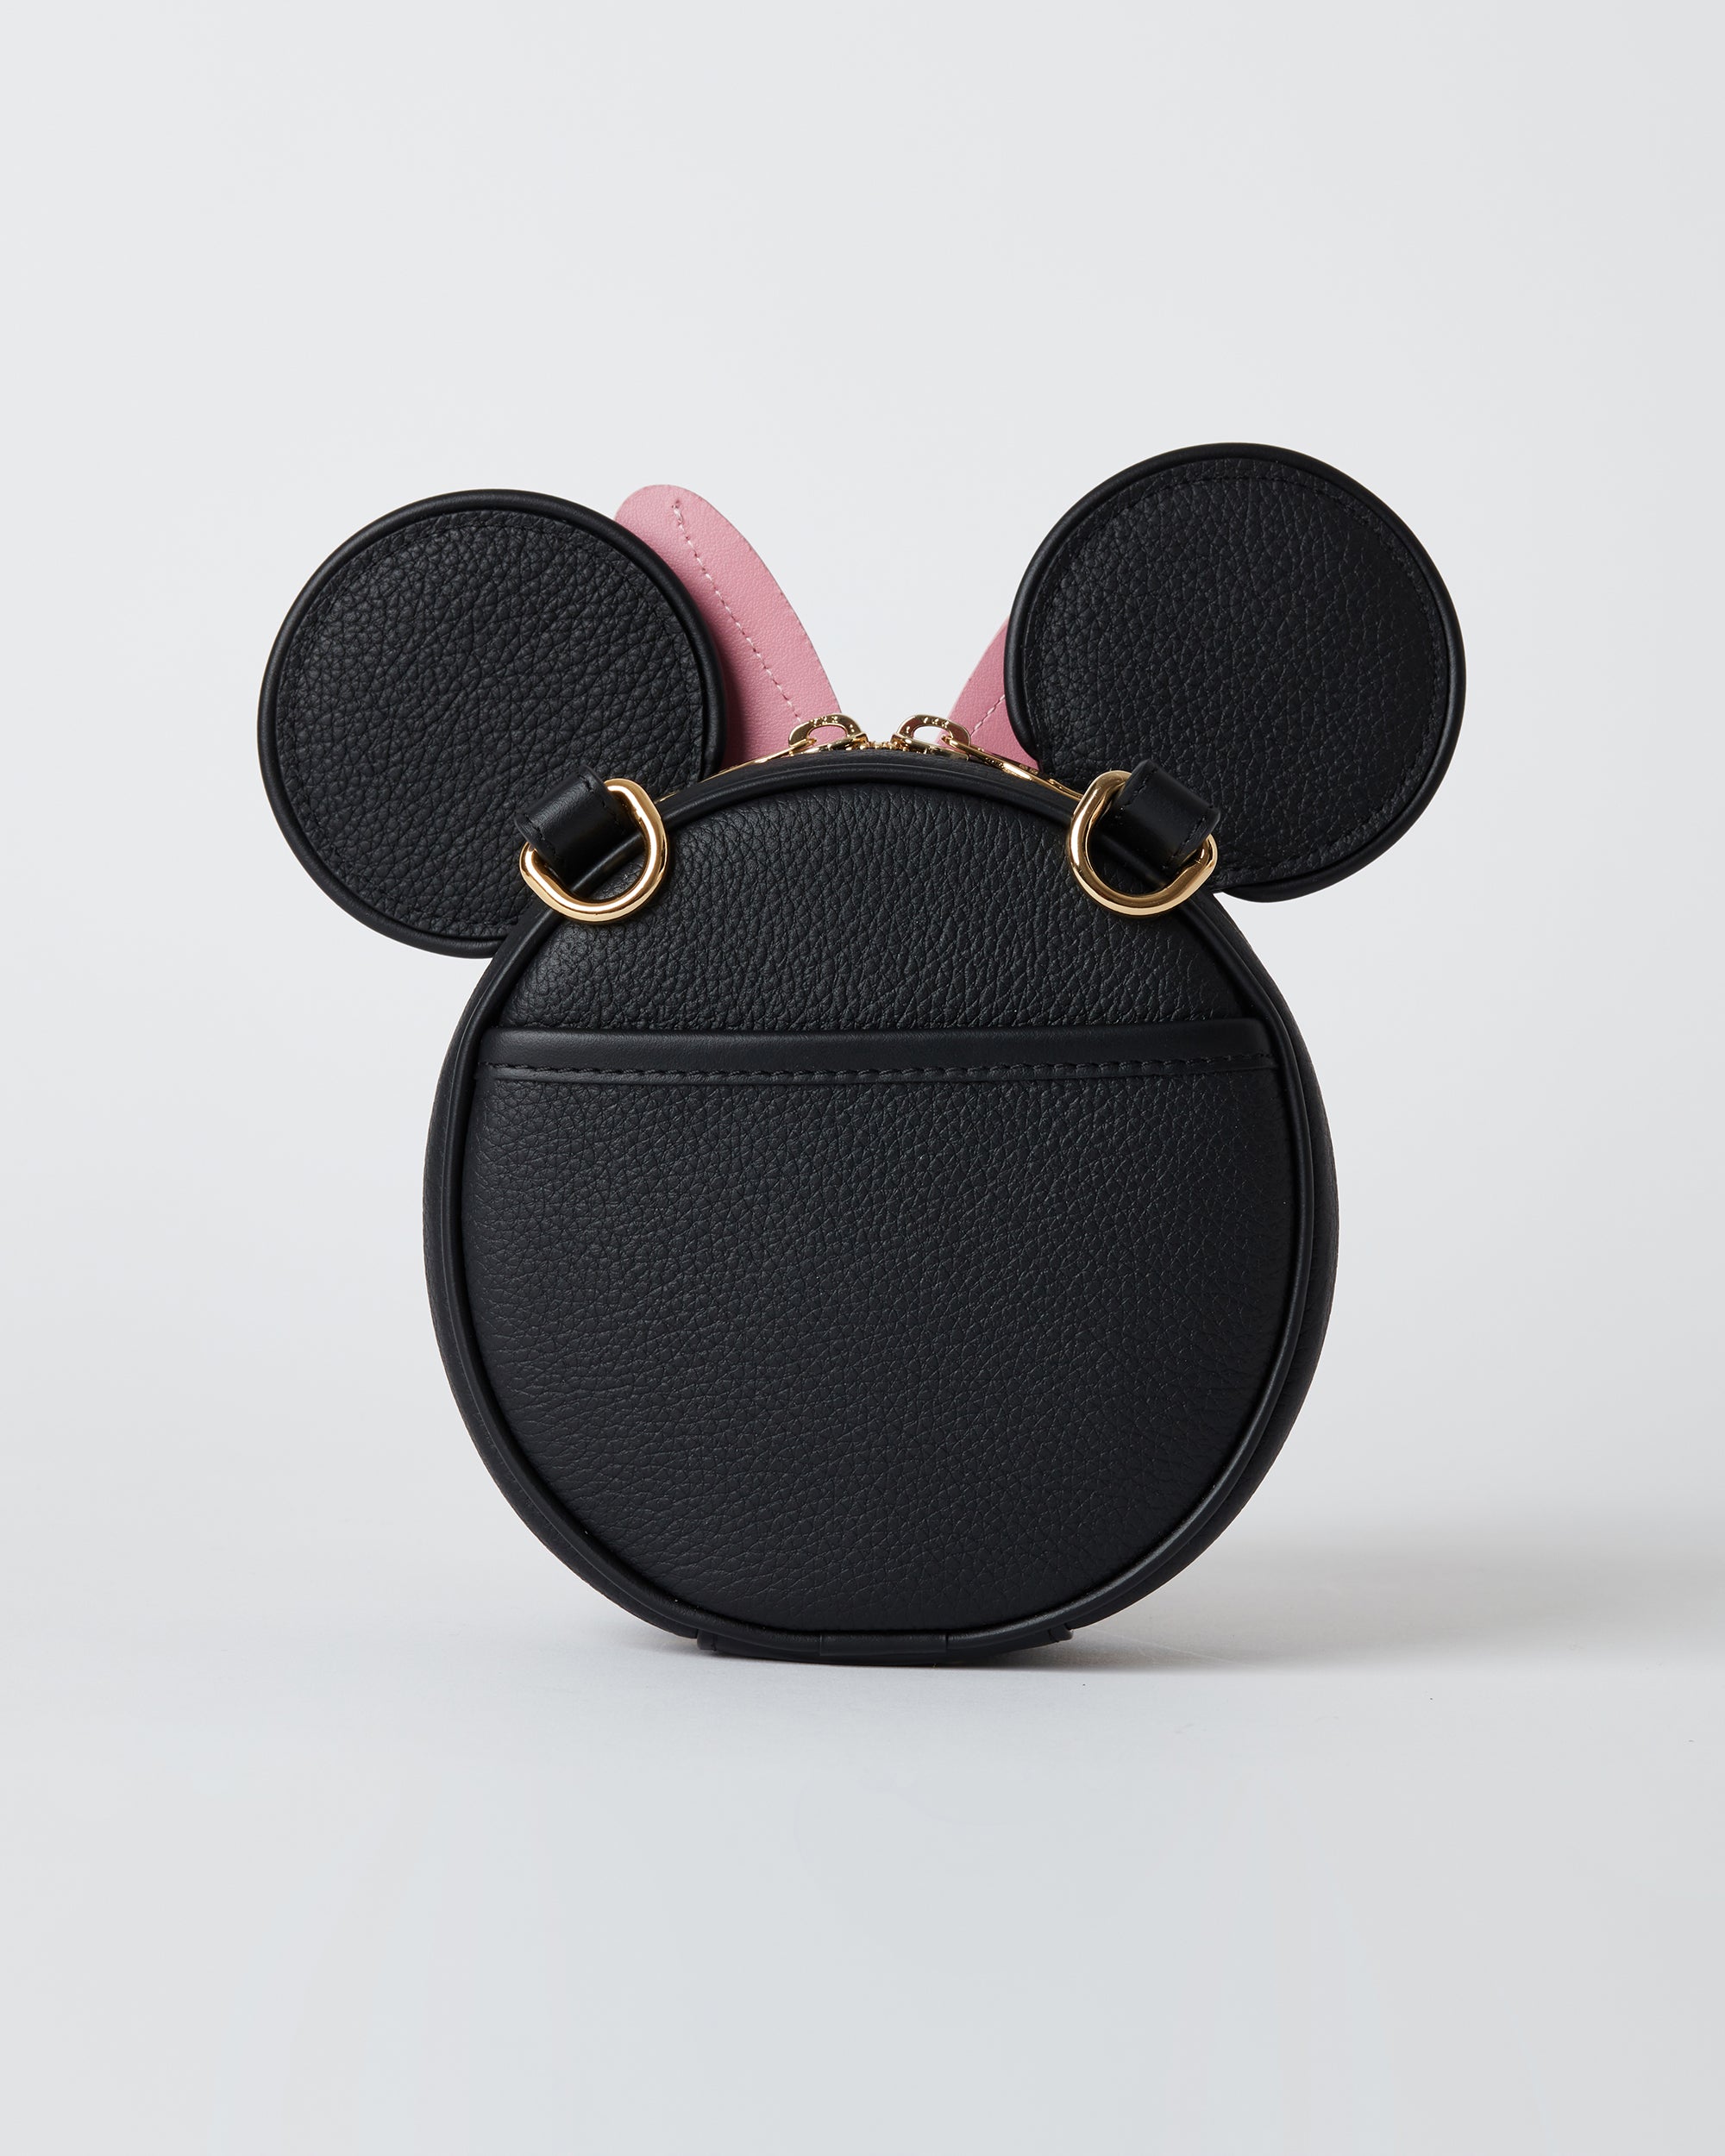 NTWRK Exclusive Sheron Barber Black Minnie Mouse Crossbody Bag